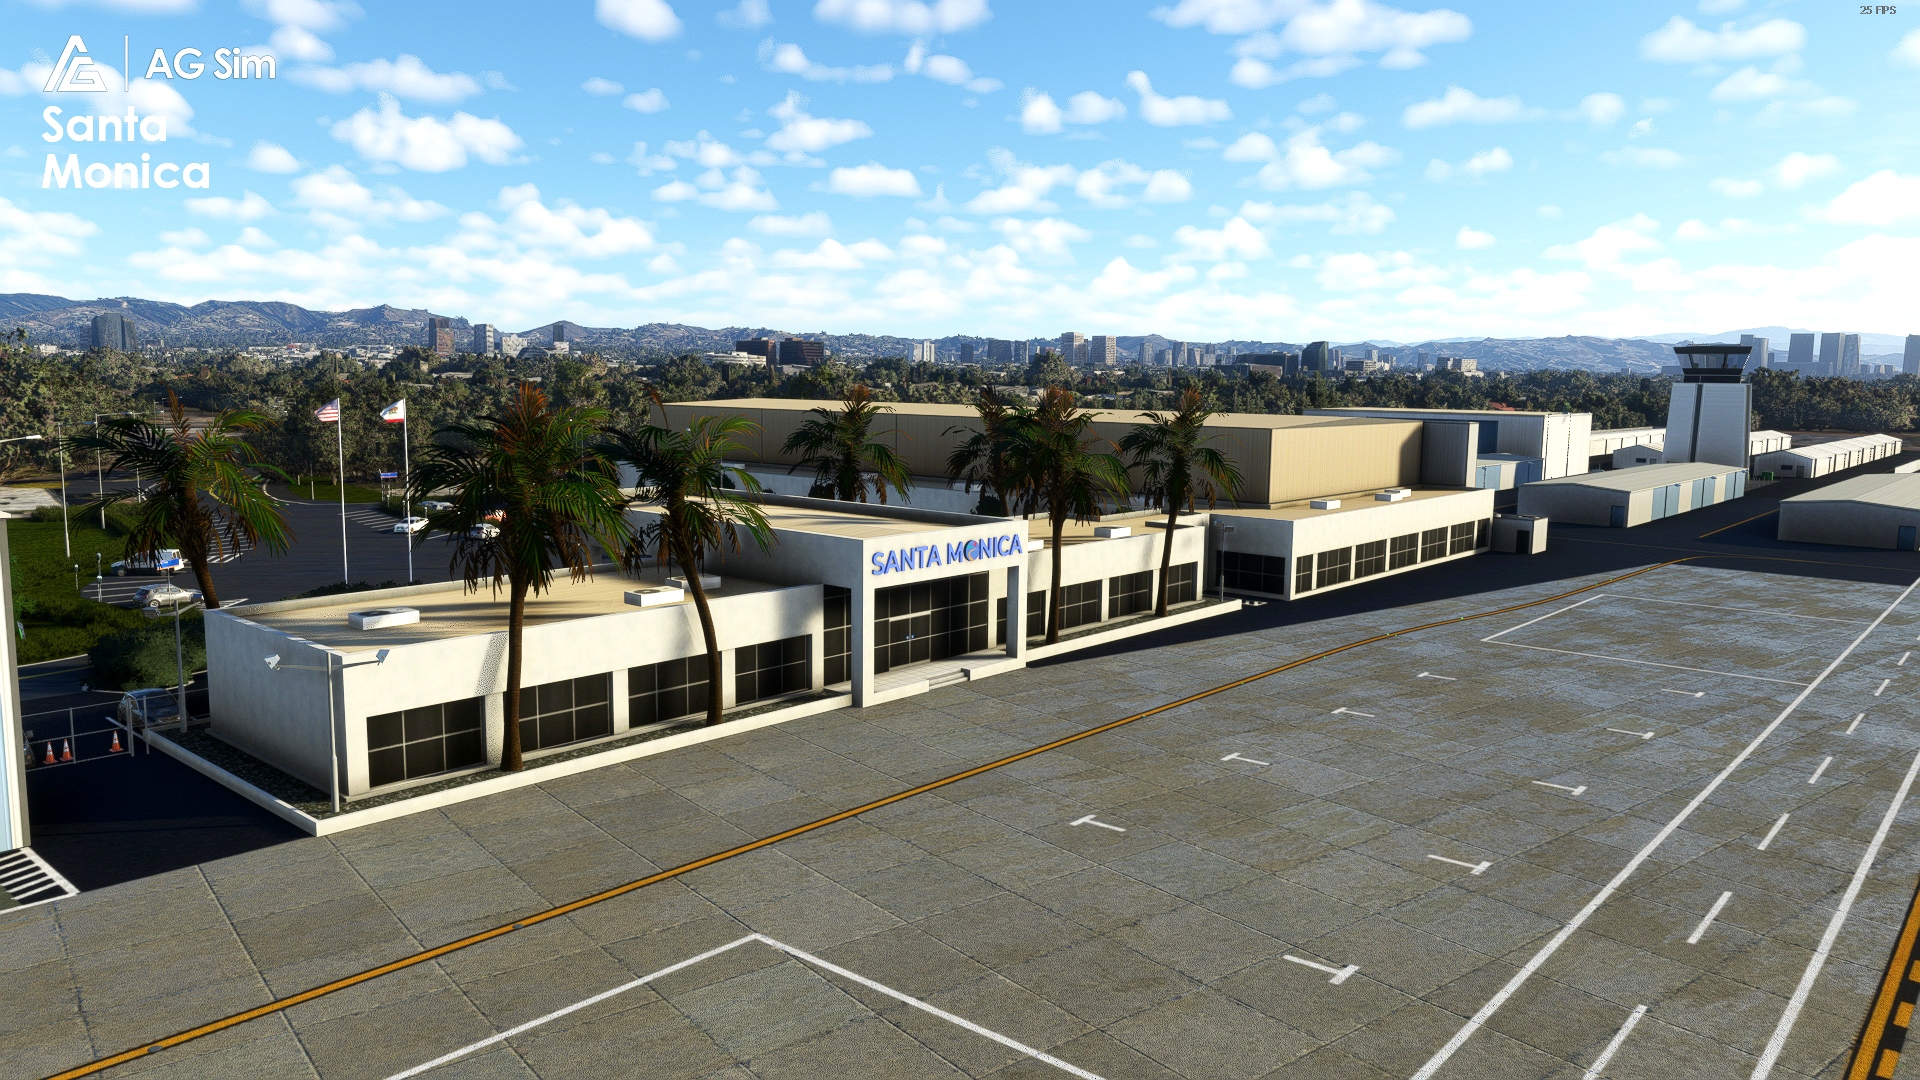 KSMO - Santa Monica Airport Microsoft Flight Simulator